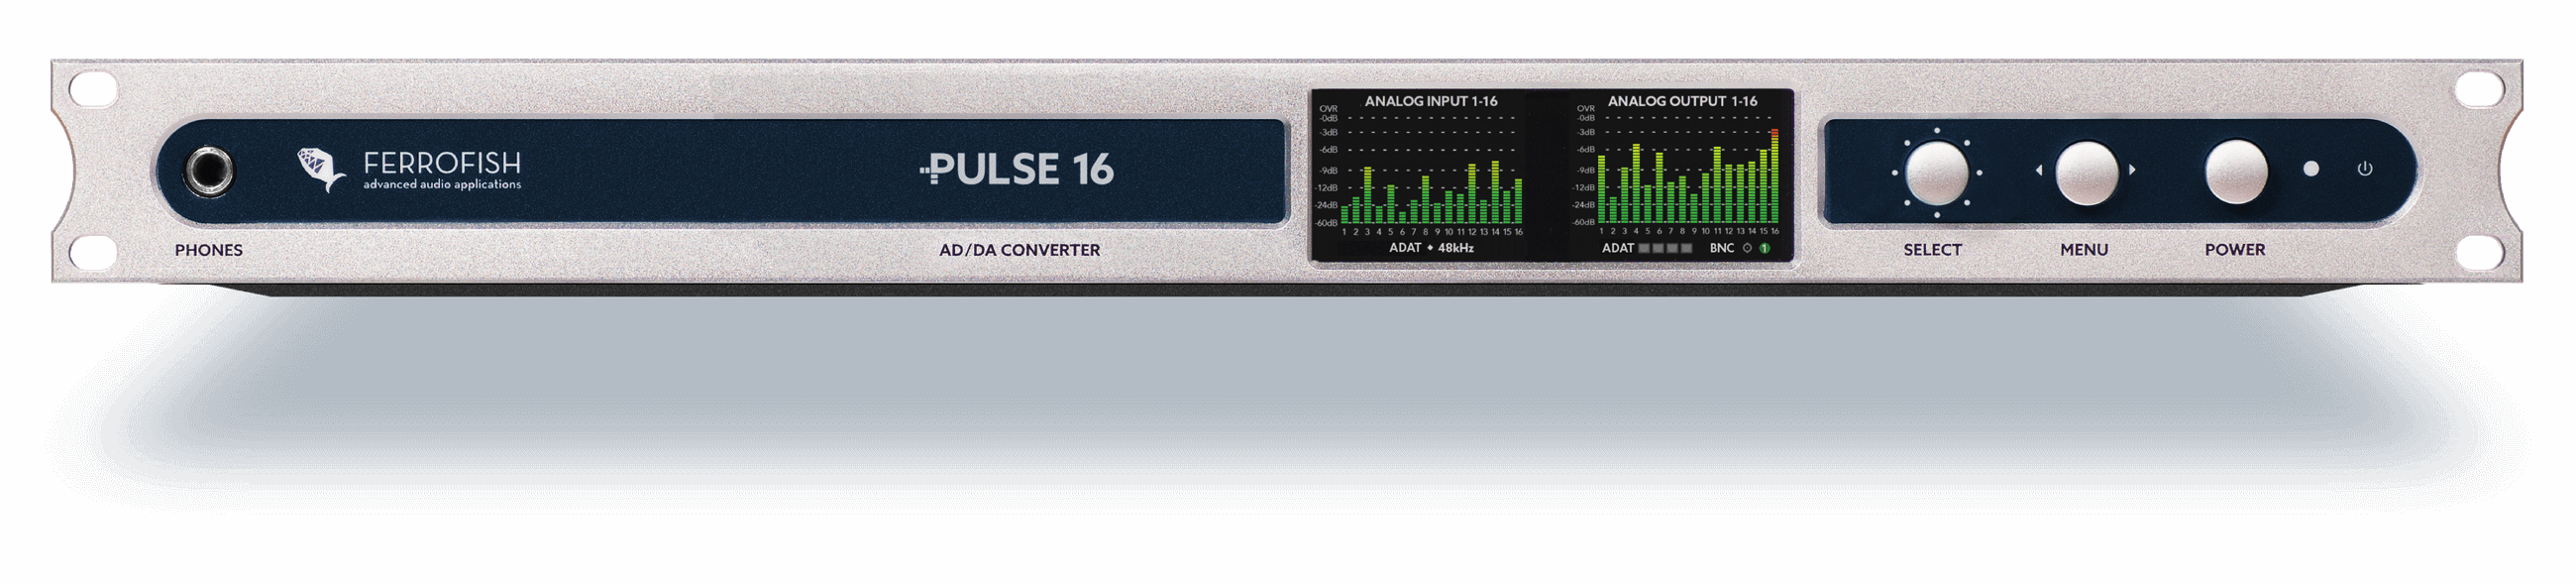 New Ferrofish Pulse 16 w/ Analog I/O Modified for +24dBu Level Compatibility | Maximum Quality. Most Affordable.